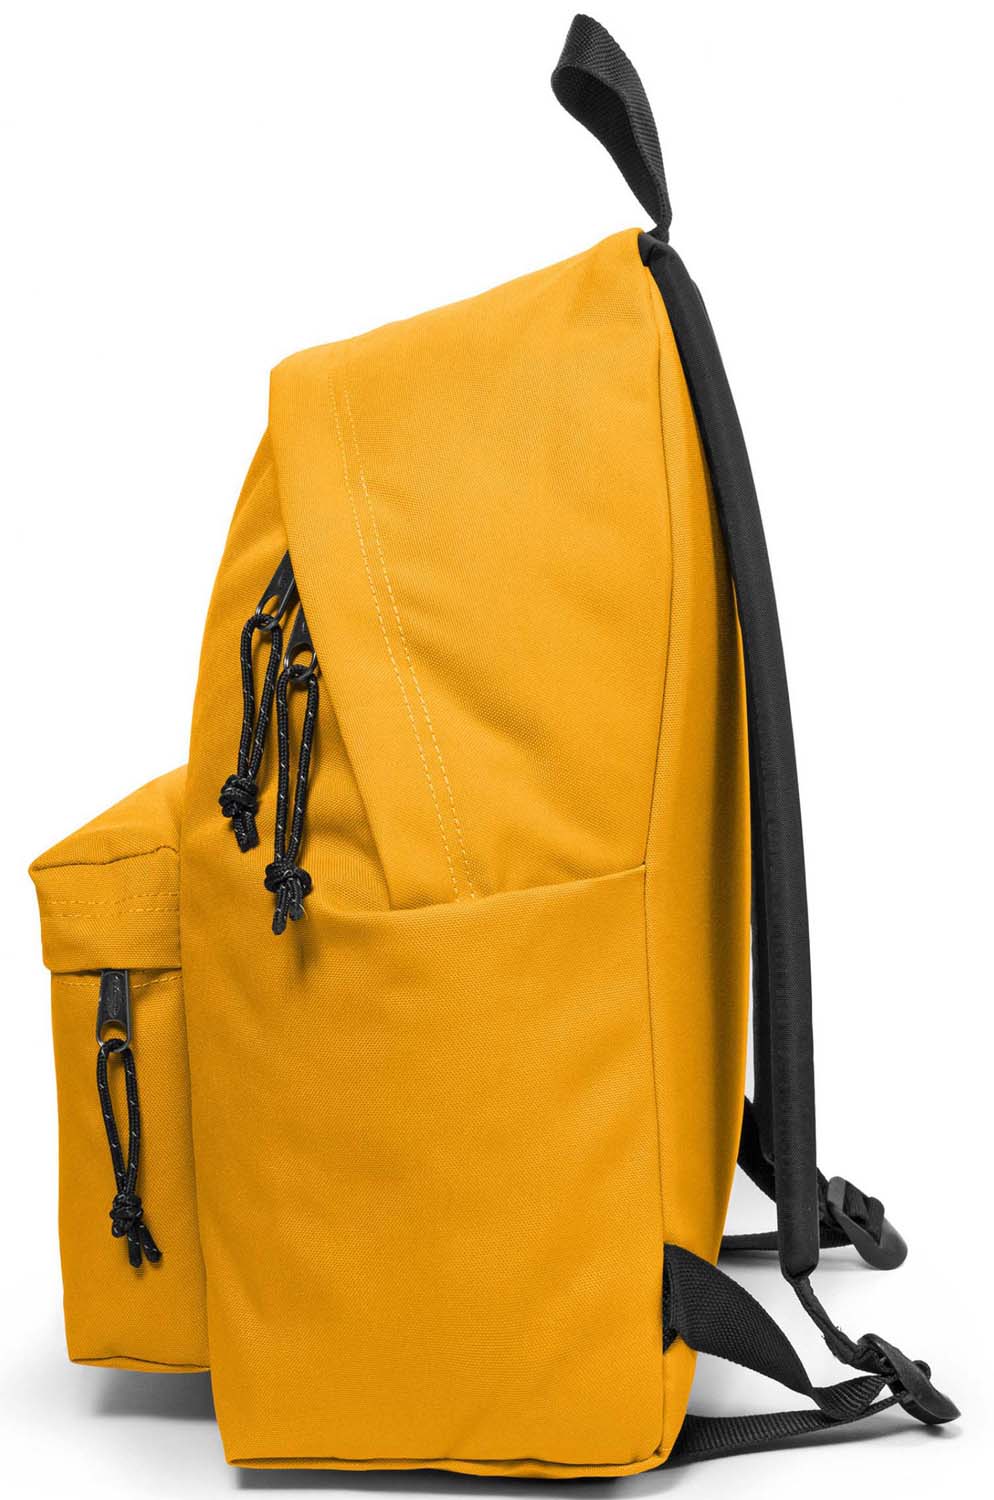 Eastpak Padded Pak'r Backpack - Sunrise Yellow